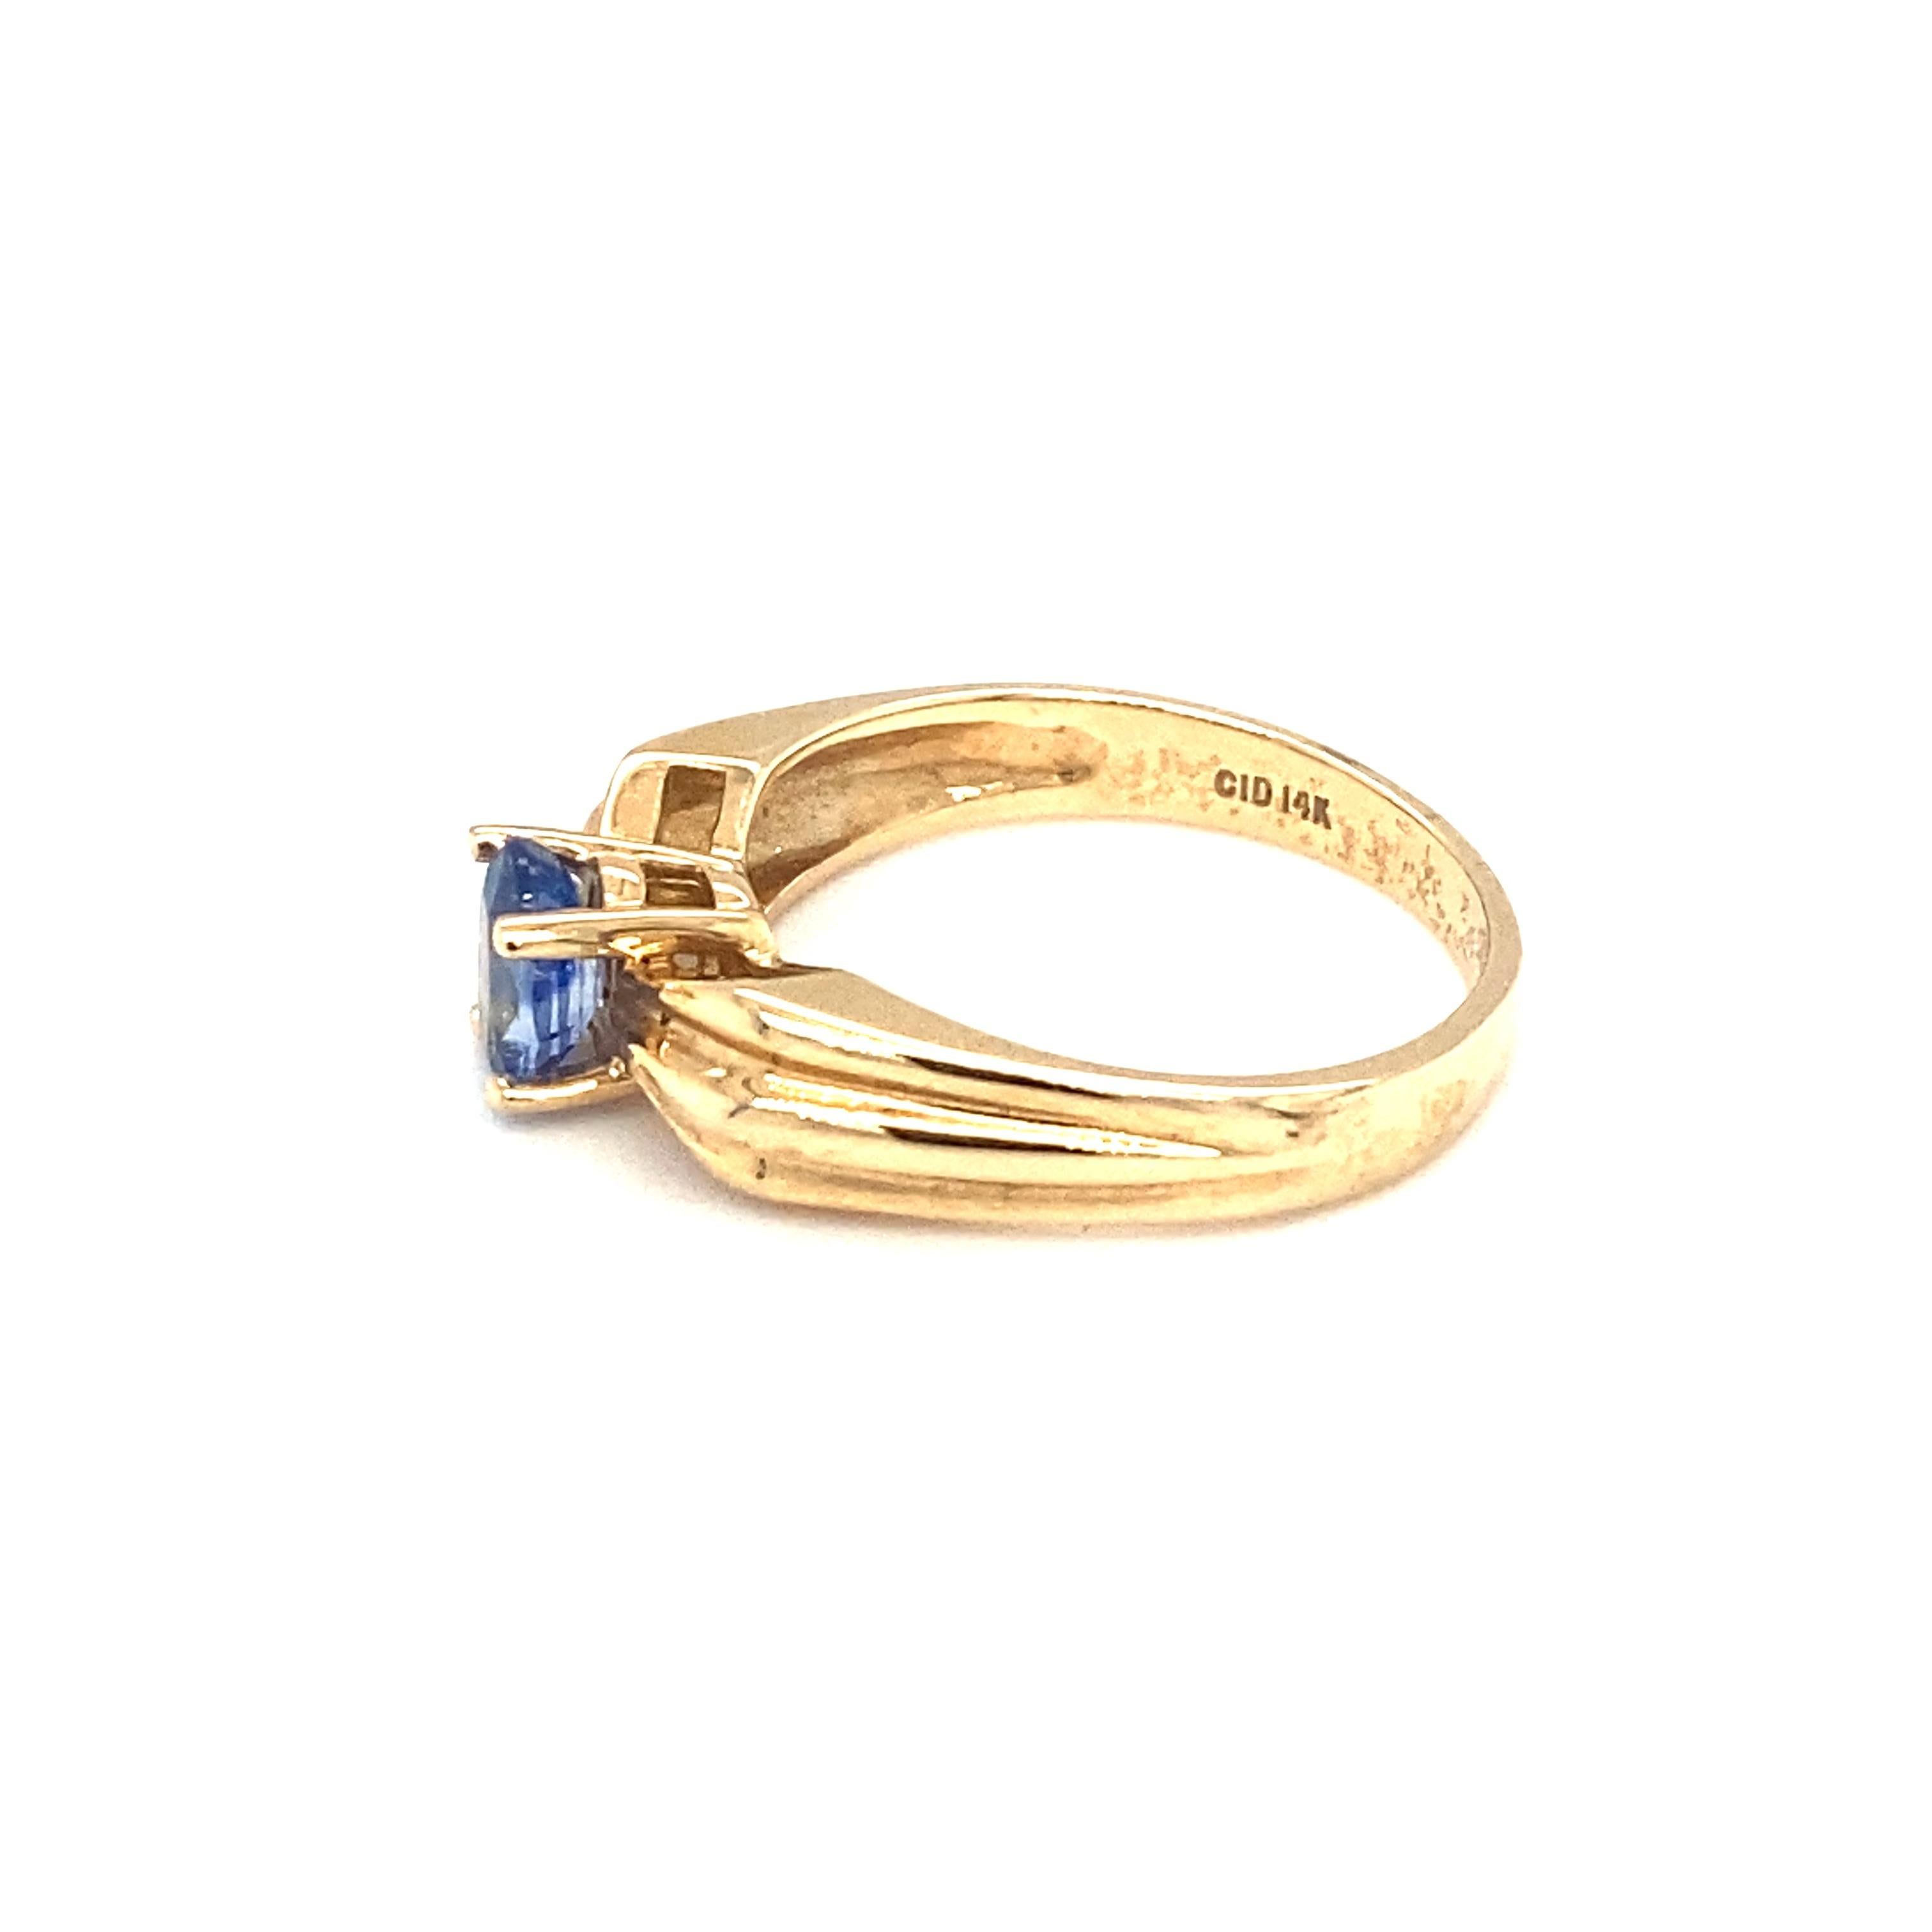 Circa 1990s 0.75 Carat Oval Tanzanite Ring in 14 Karat Yellow Gold In Excellent Condition For Sale In Atlanta, GA